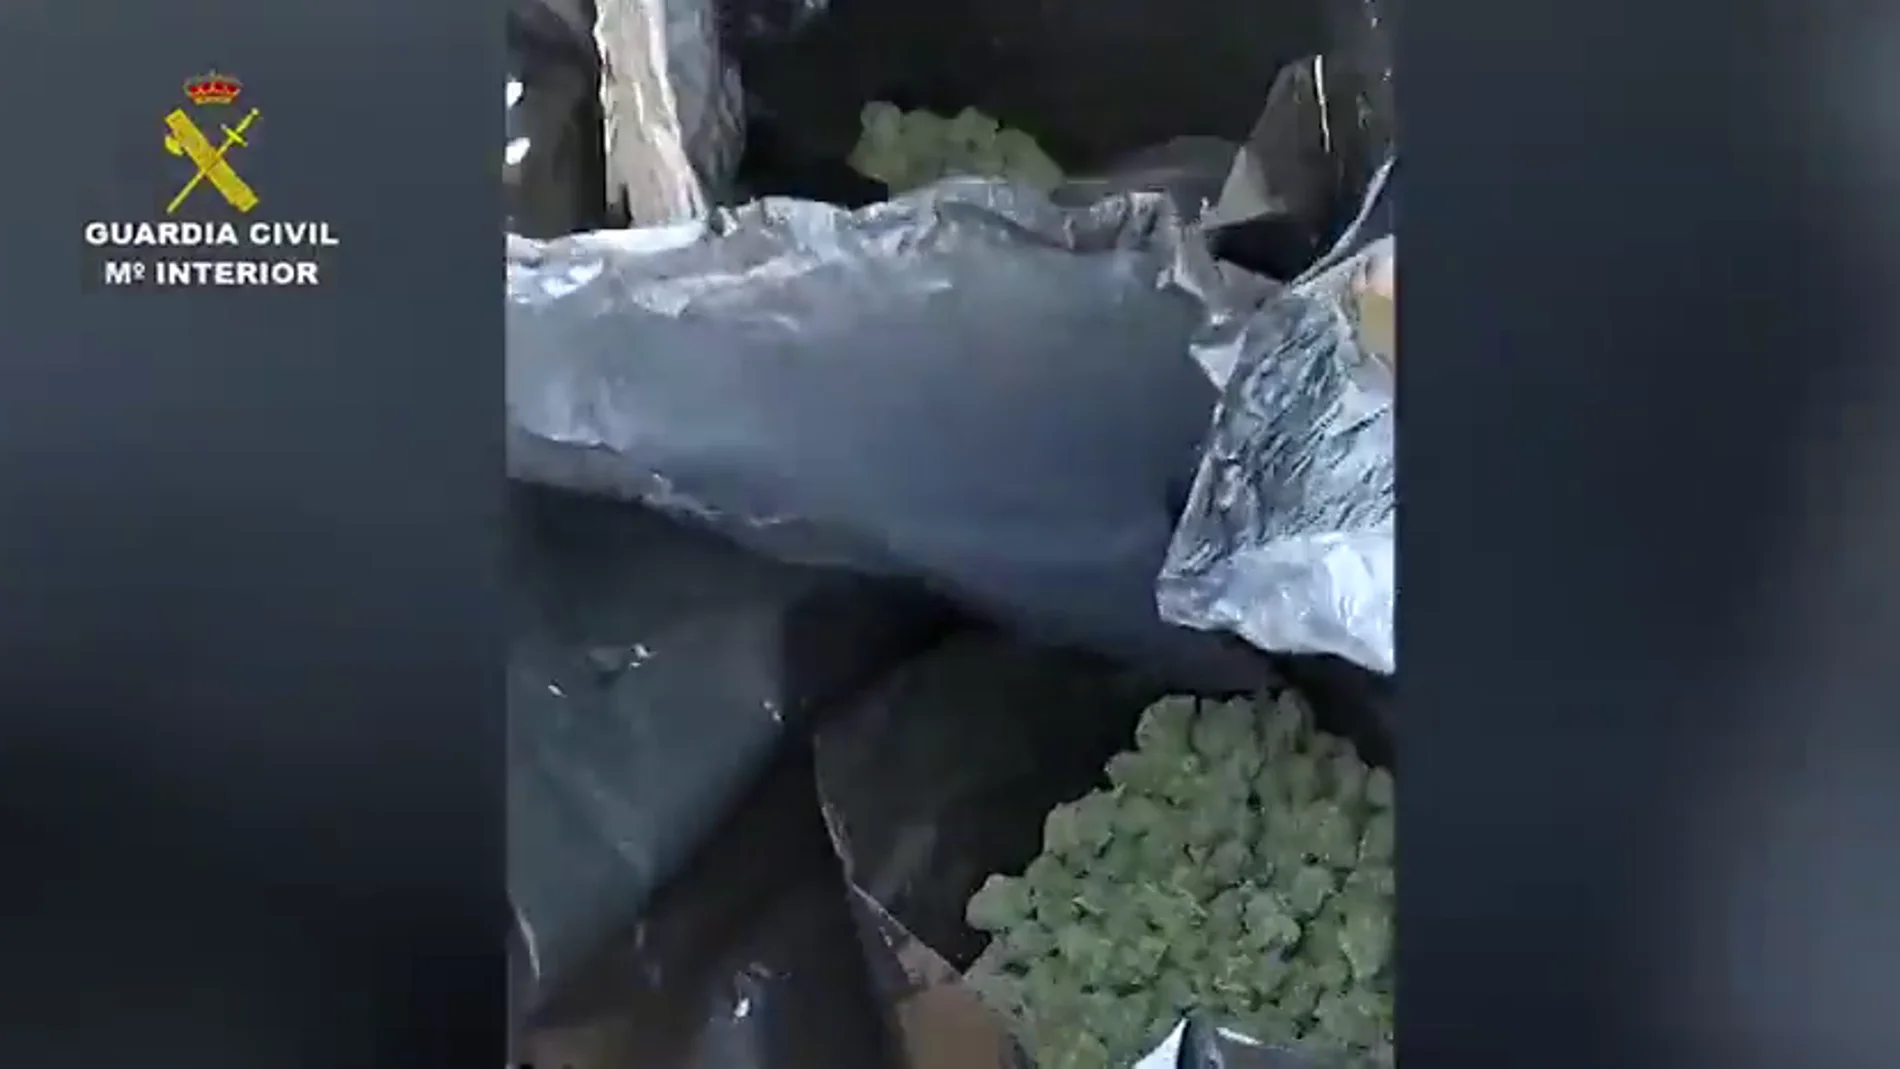 La Guardia Civil intercepta una furgoneta con 29 kilos de marihuana en su interior